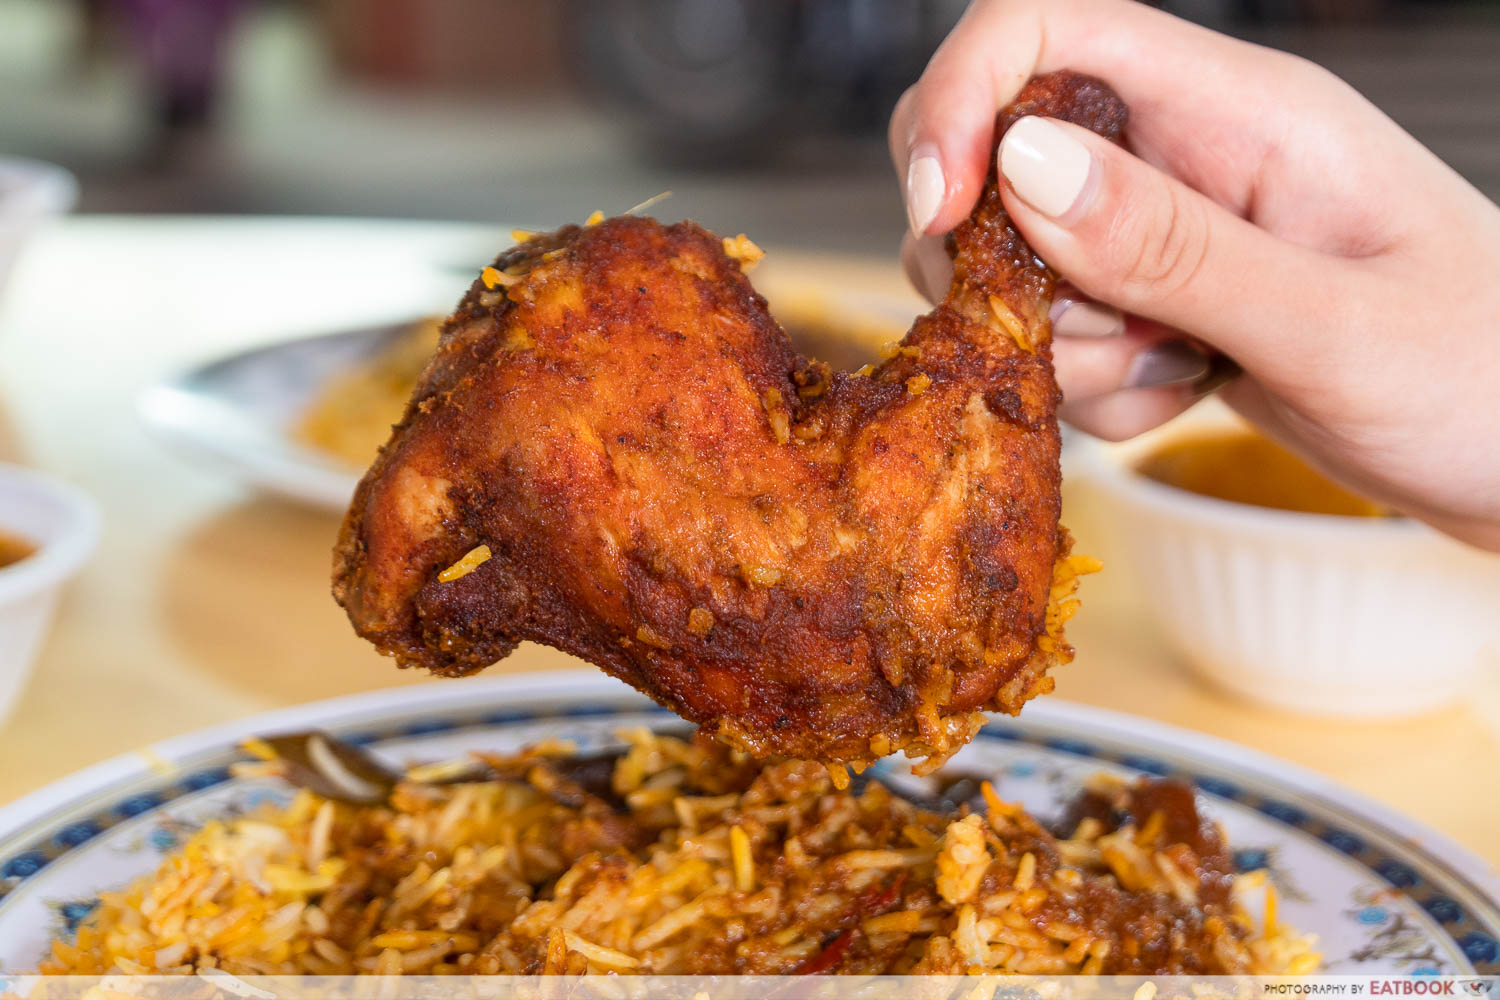 geylang hamid's briyani - fried chicken interaction